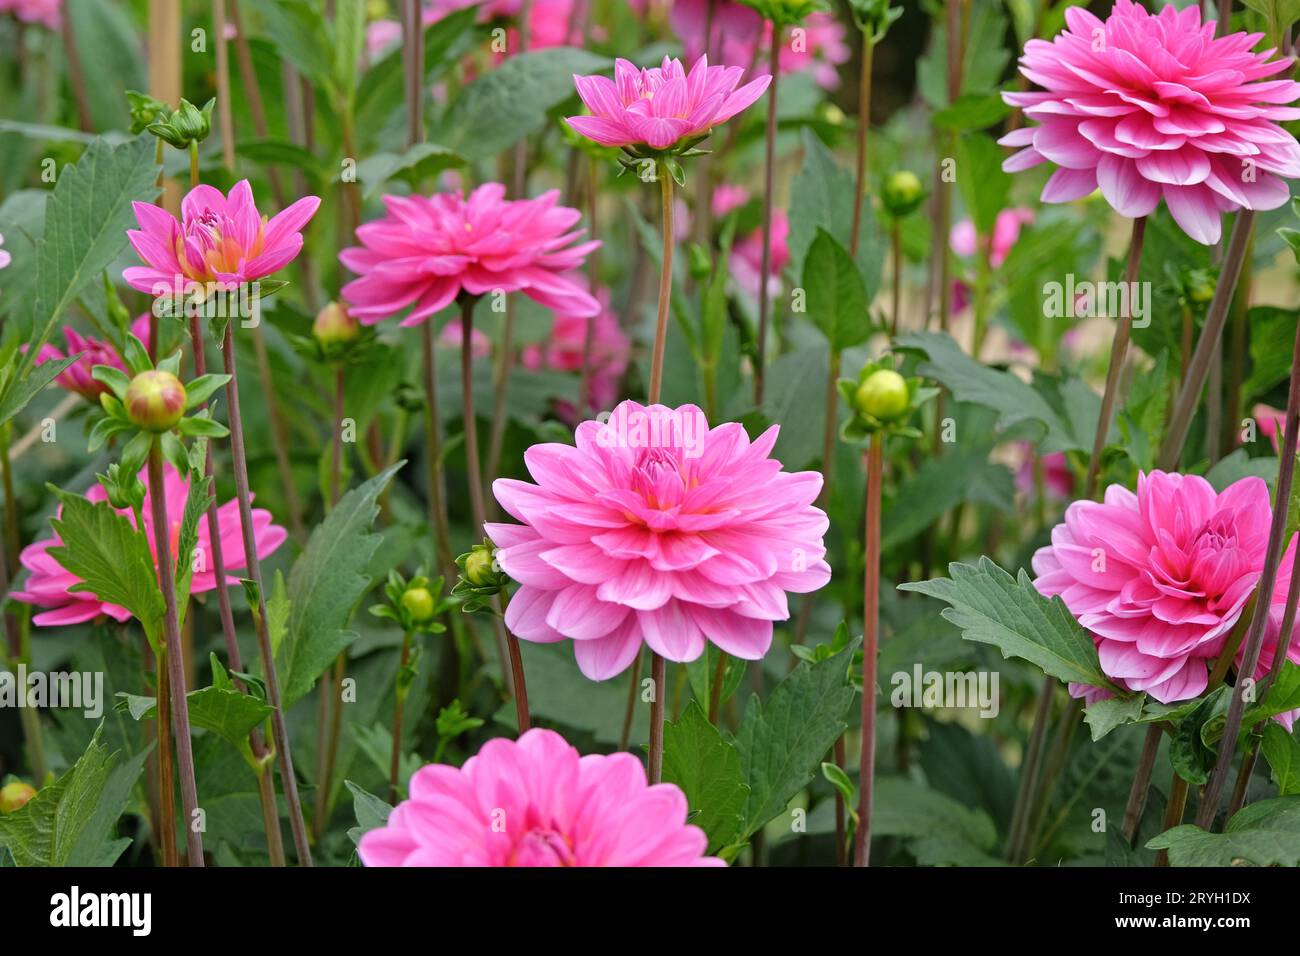 Bright pink decorative dahlia 'Garden Time' in flower. Stock Photo